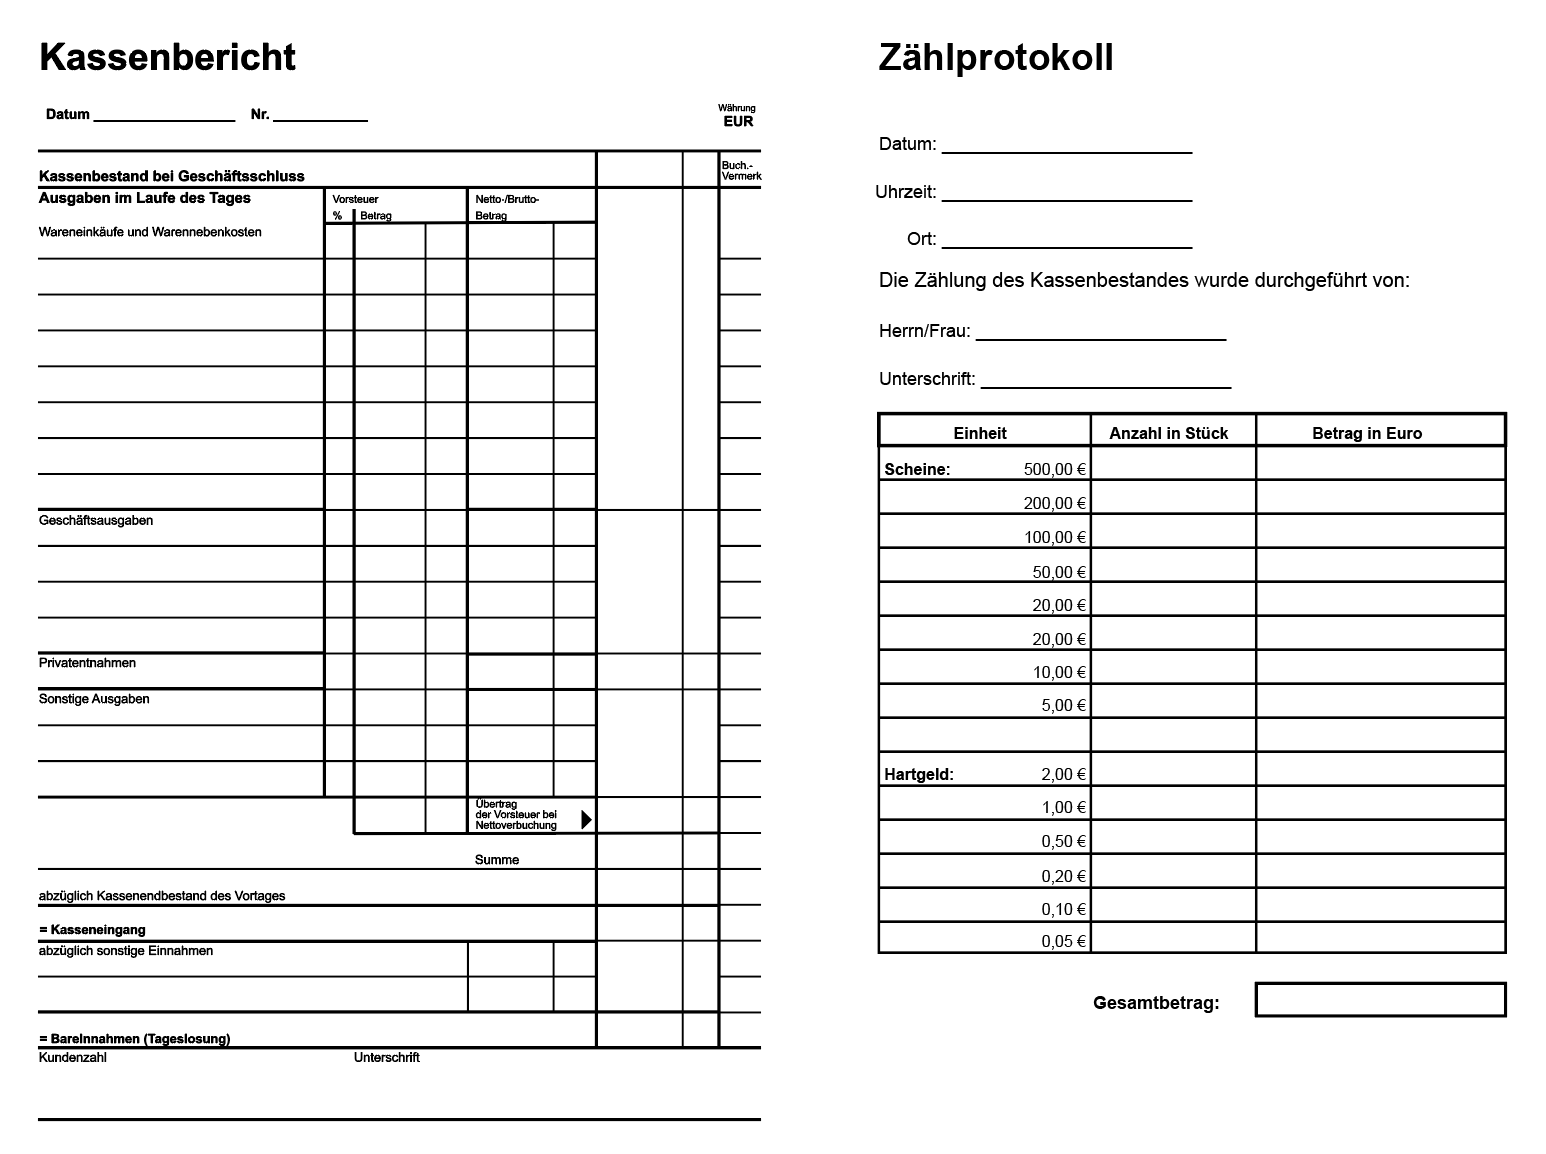 Kassenbericht und Zählprotokoll PDF